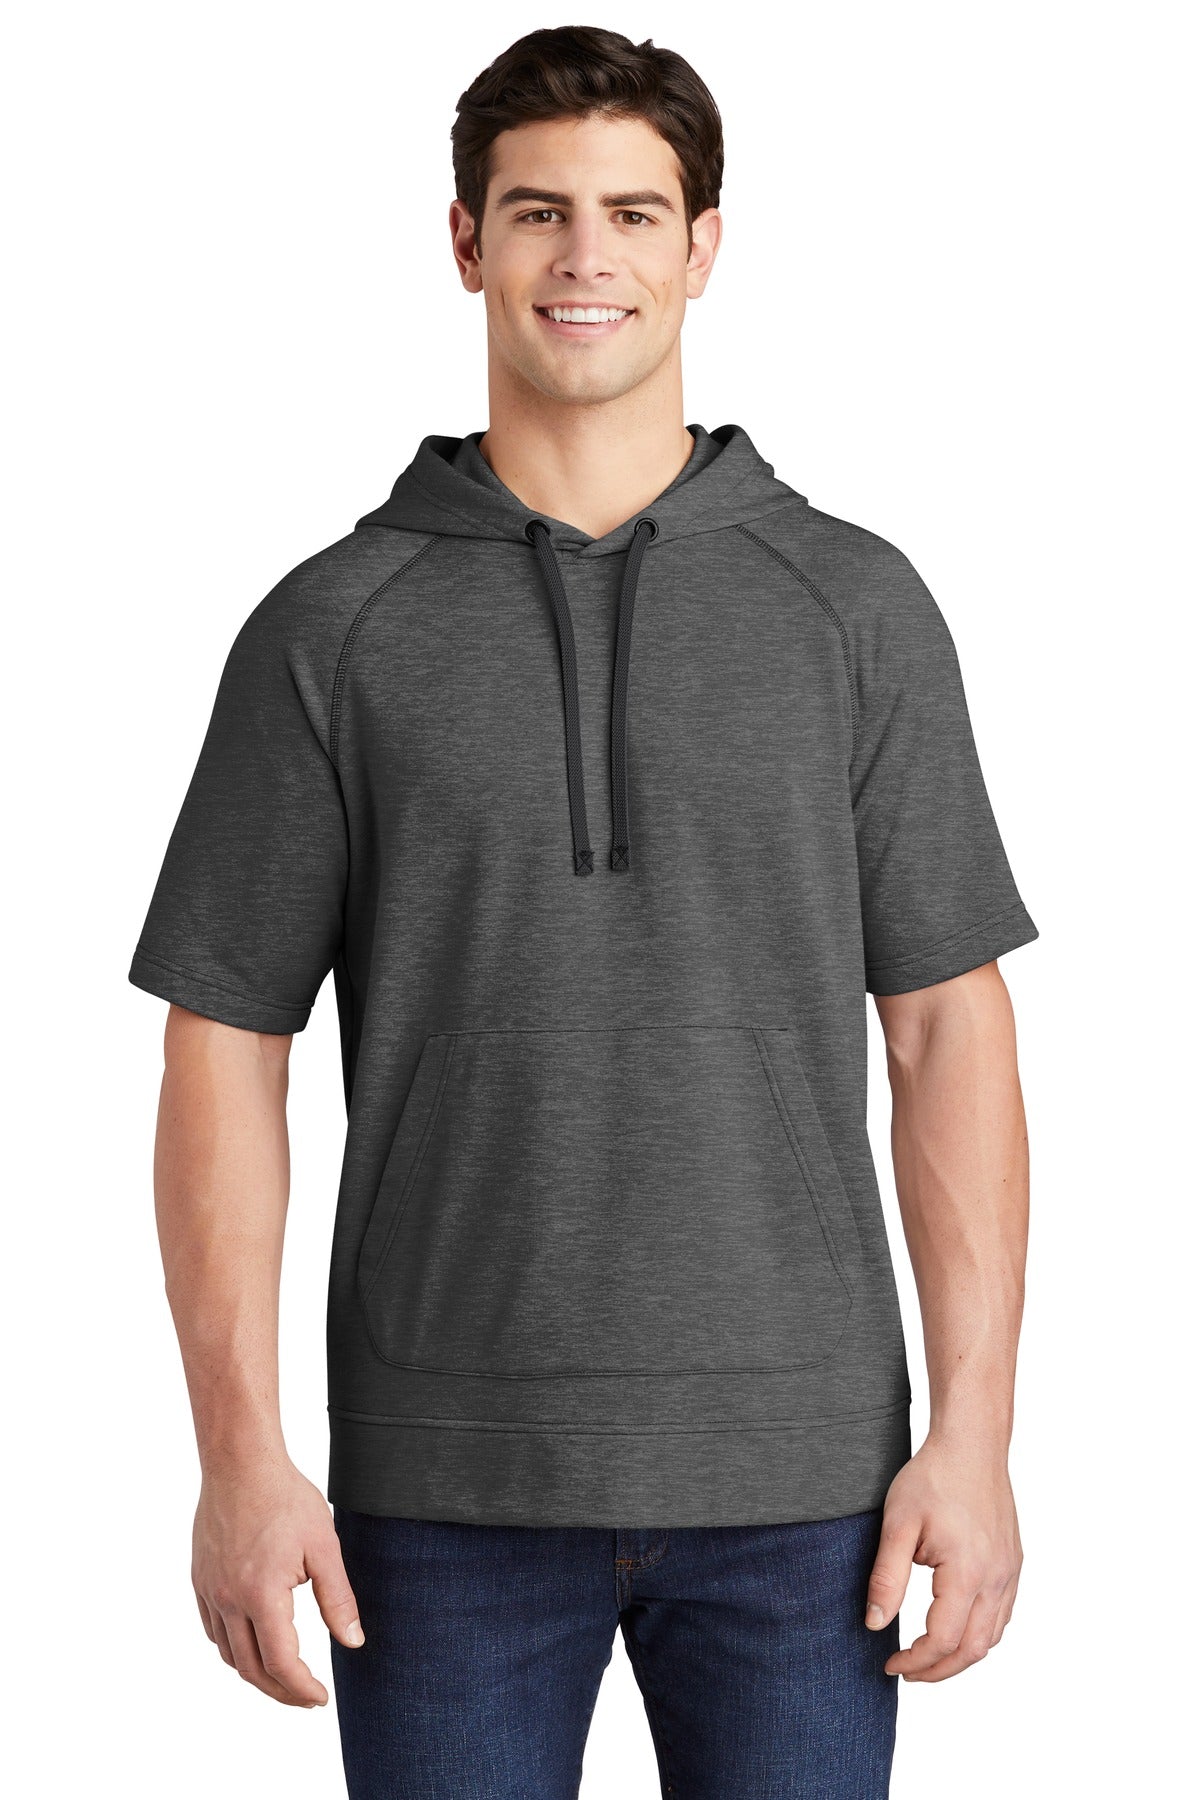 Team Truth StandsSport-Tek ® PosiCharge ® Tri-Blend Wicking Fleece Short Sleeve Hooded Pullover ST297